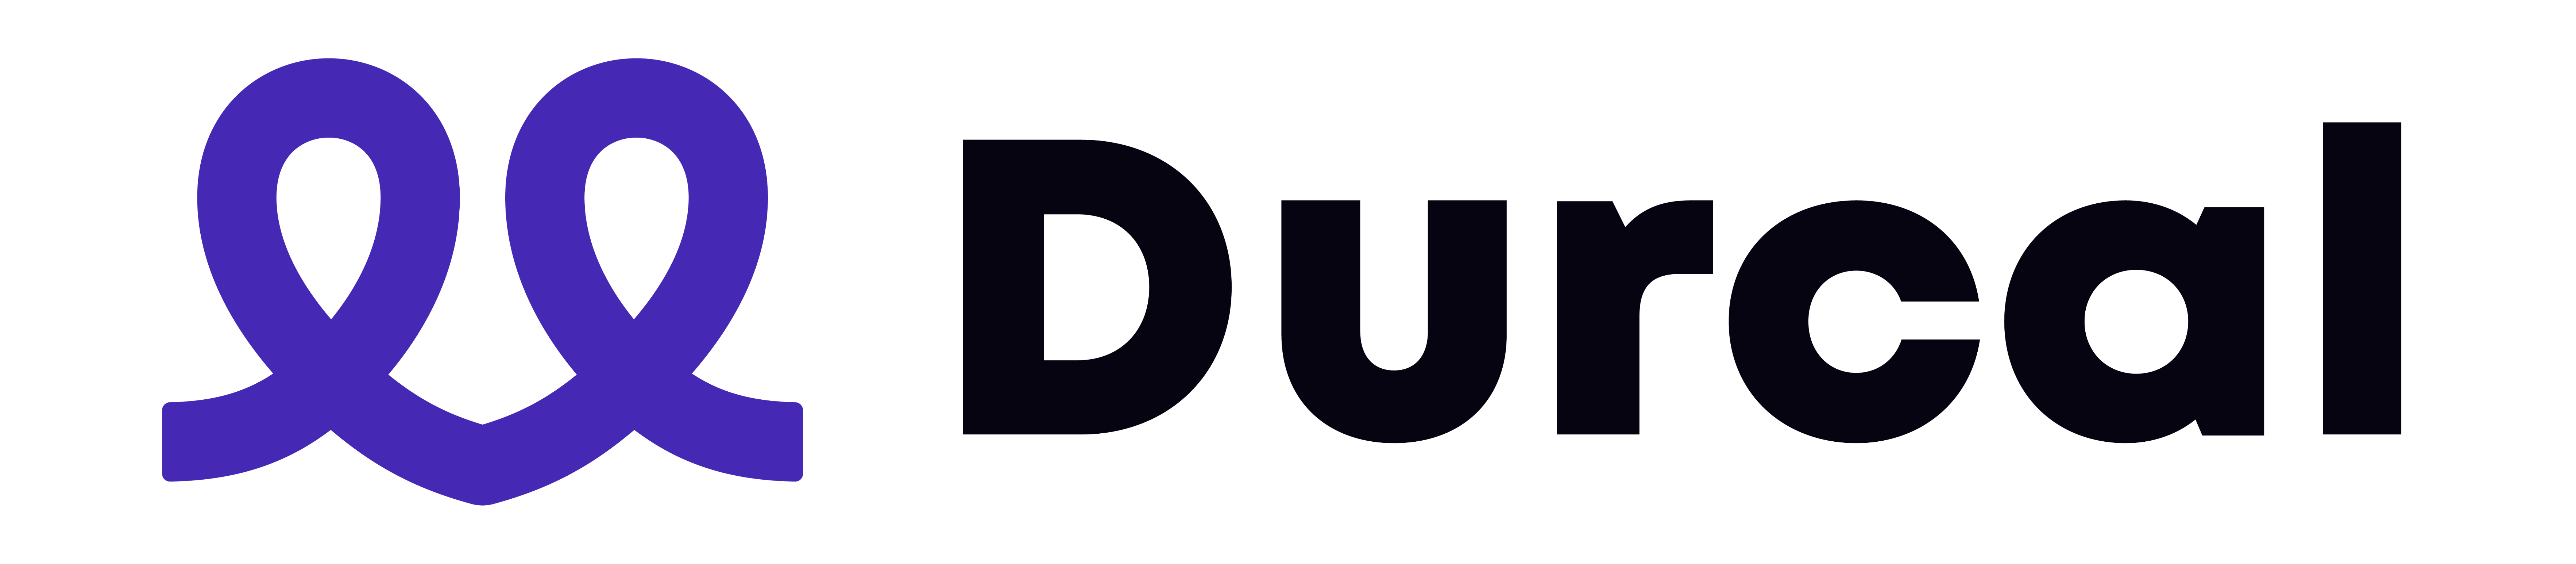 Logo Durcal ampliat